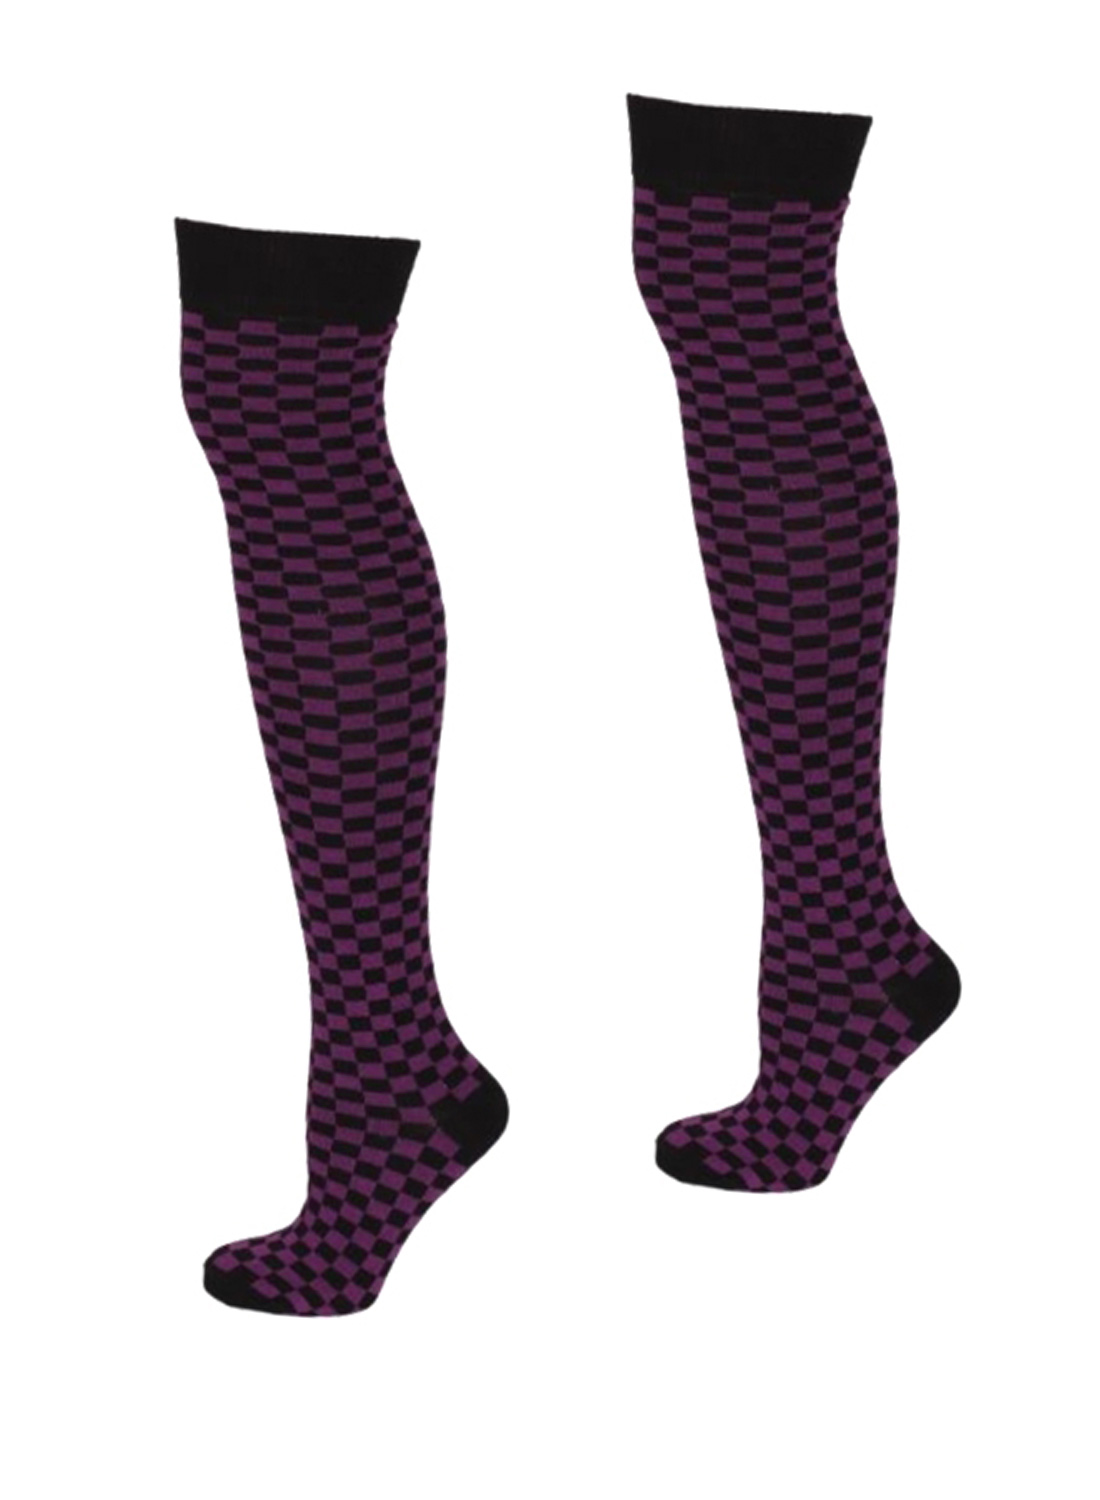 OK Small checkered Socks Black/Purple